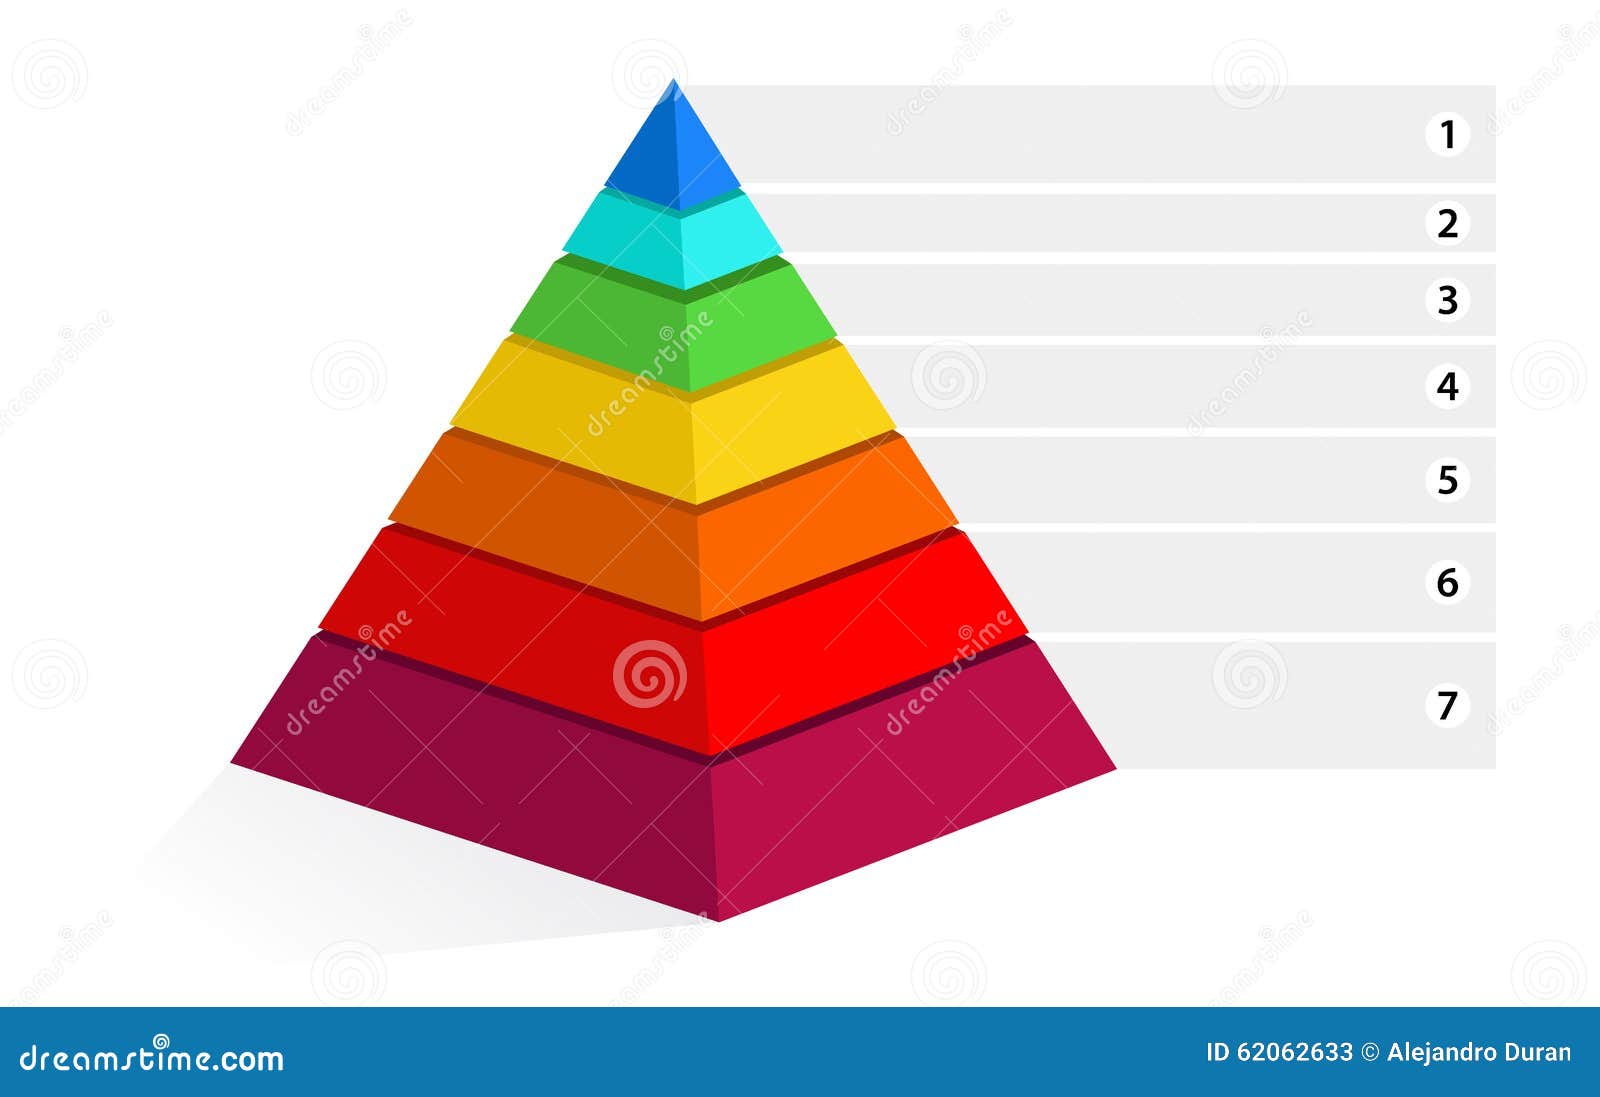 maslow pyramid